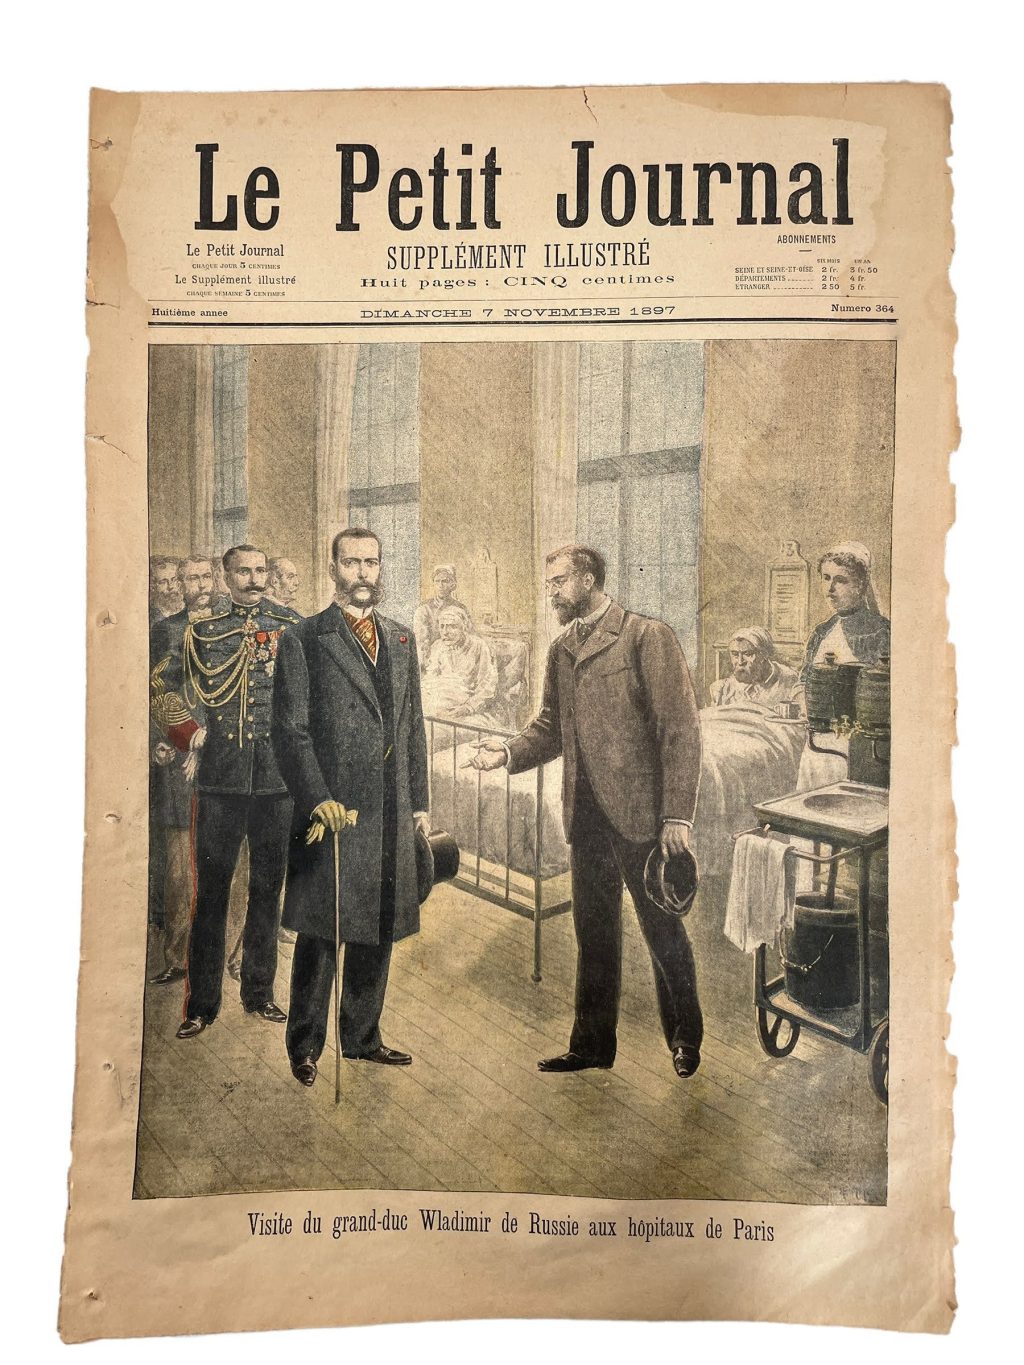 Antique French Le Petit Journal Newspaper Supplement Illustre Number 364 7/11/1897 Illustrations 8 Pages Memorabilia Collector c1897